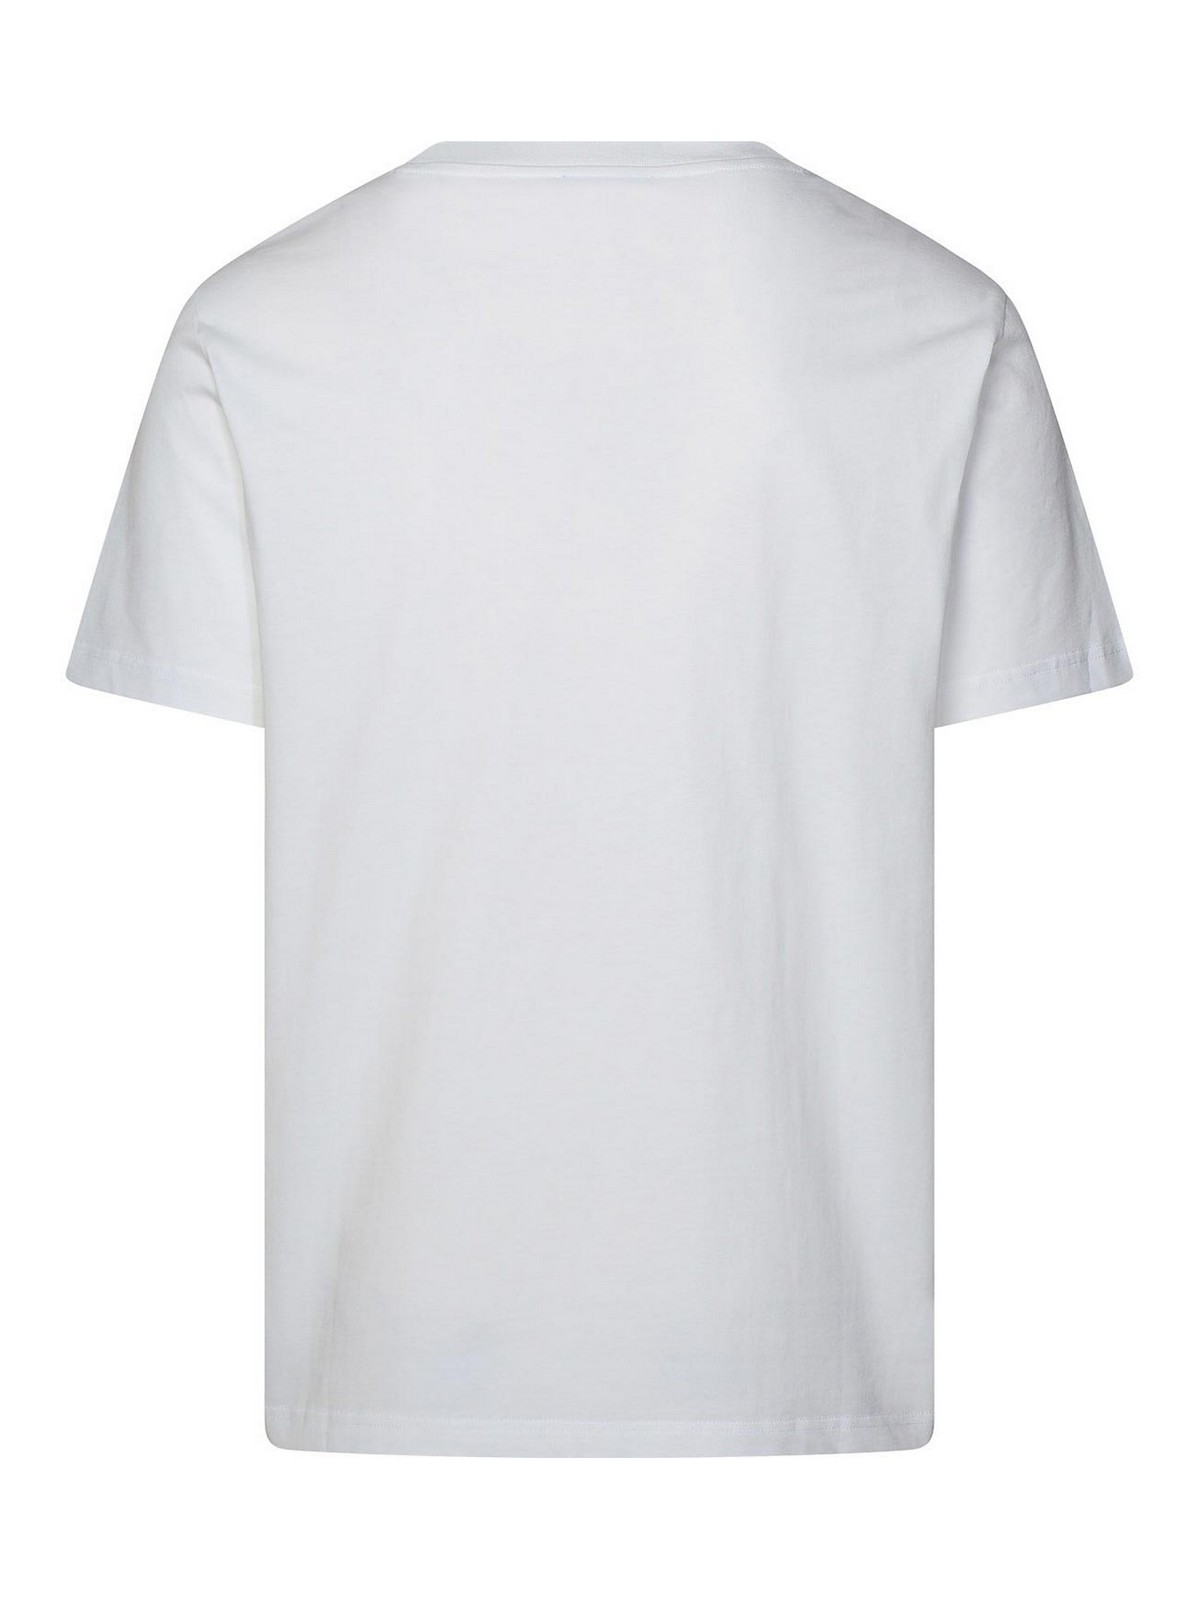 Shop Apc T-shirt James In White